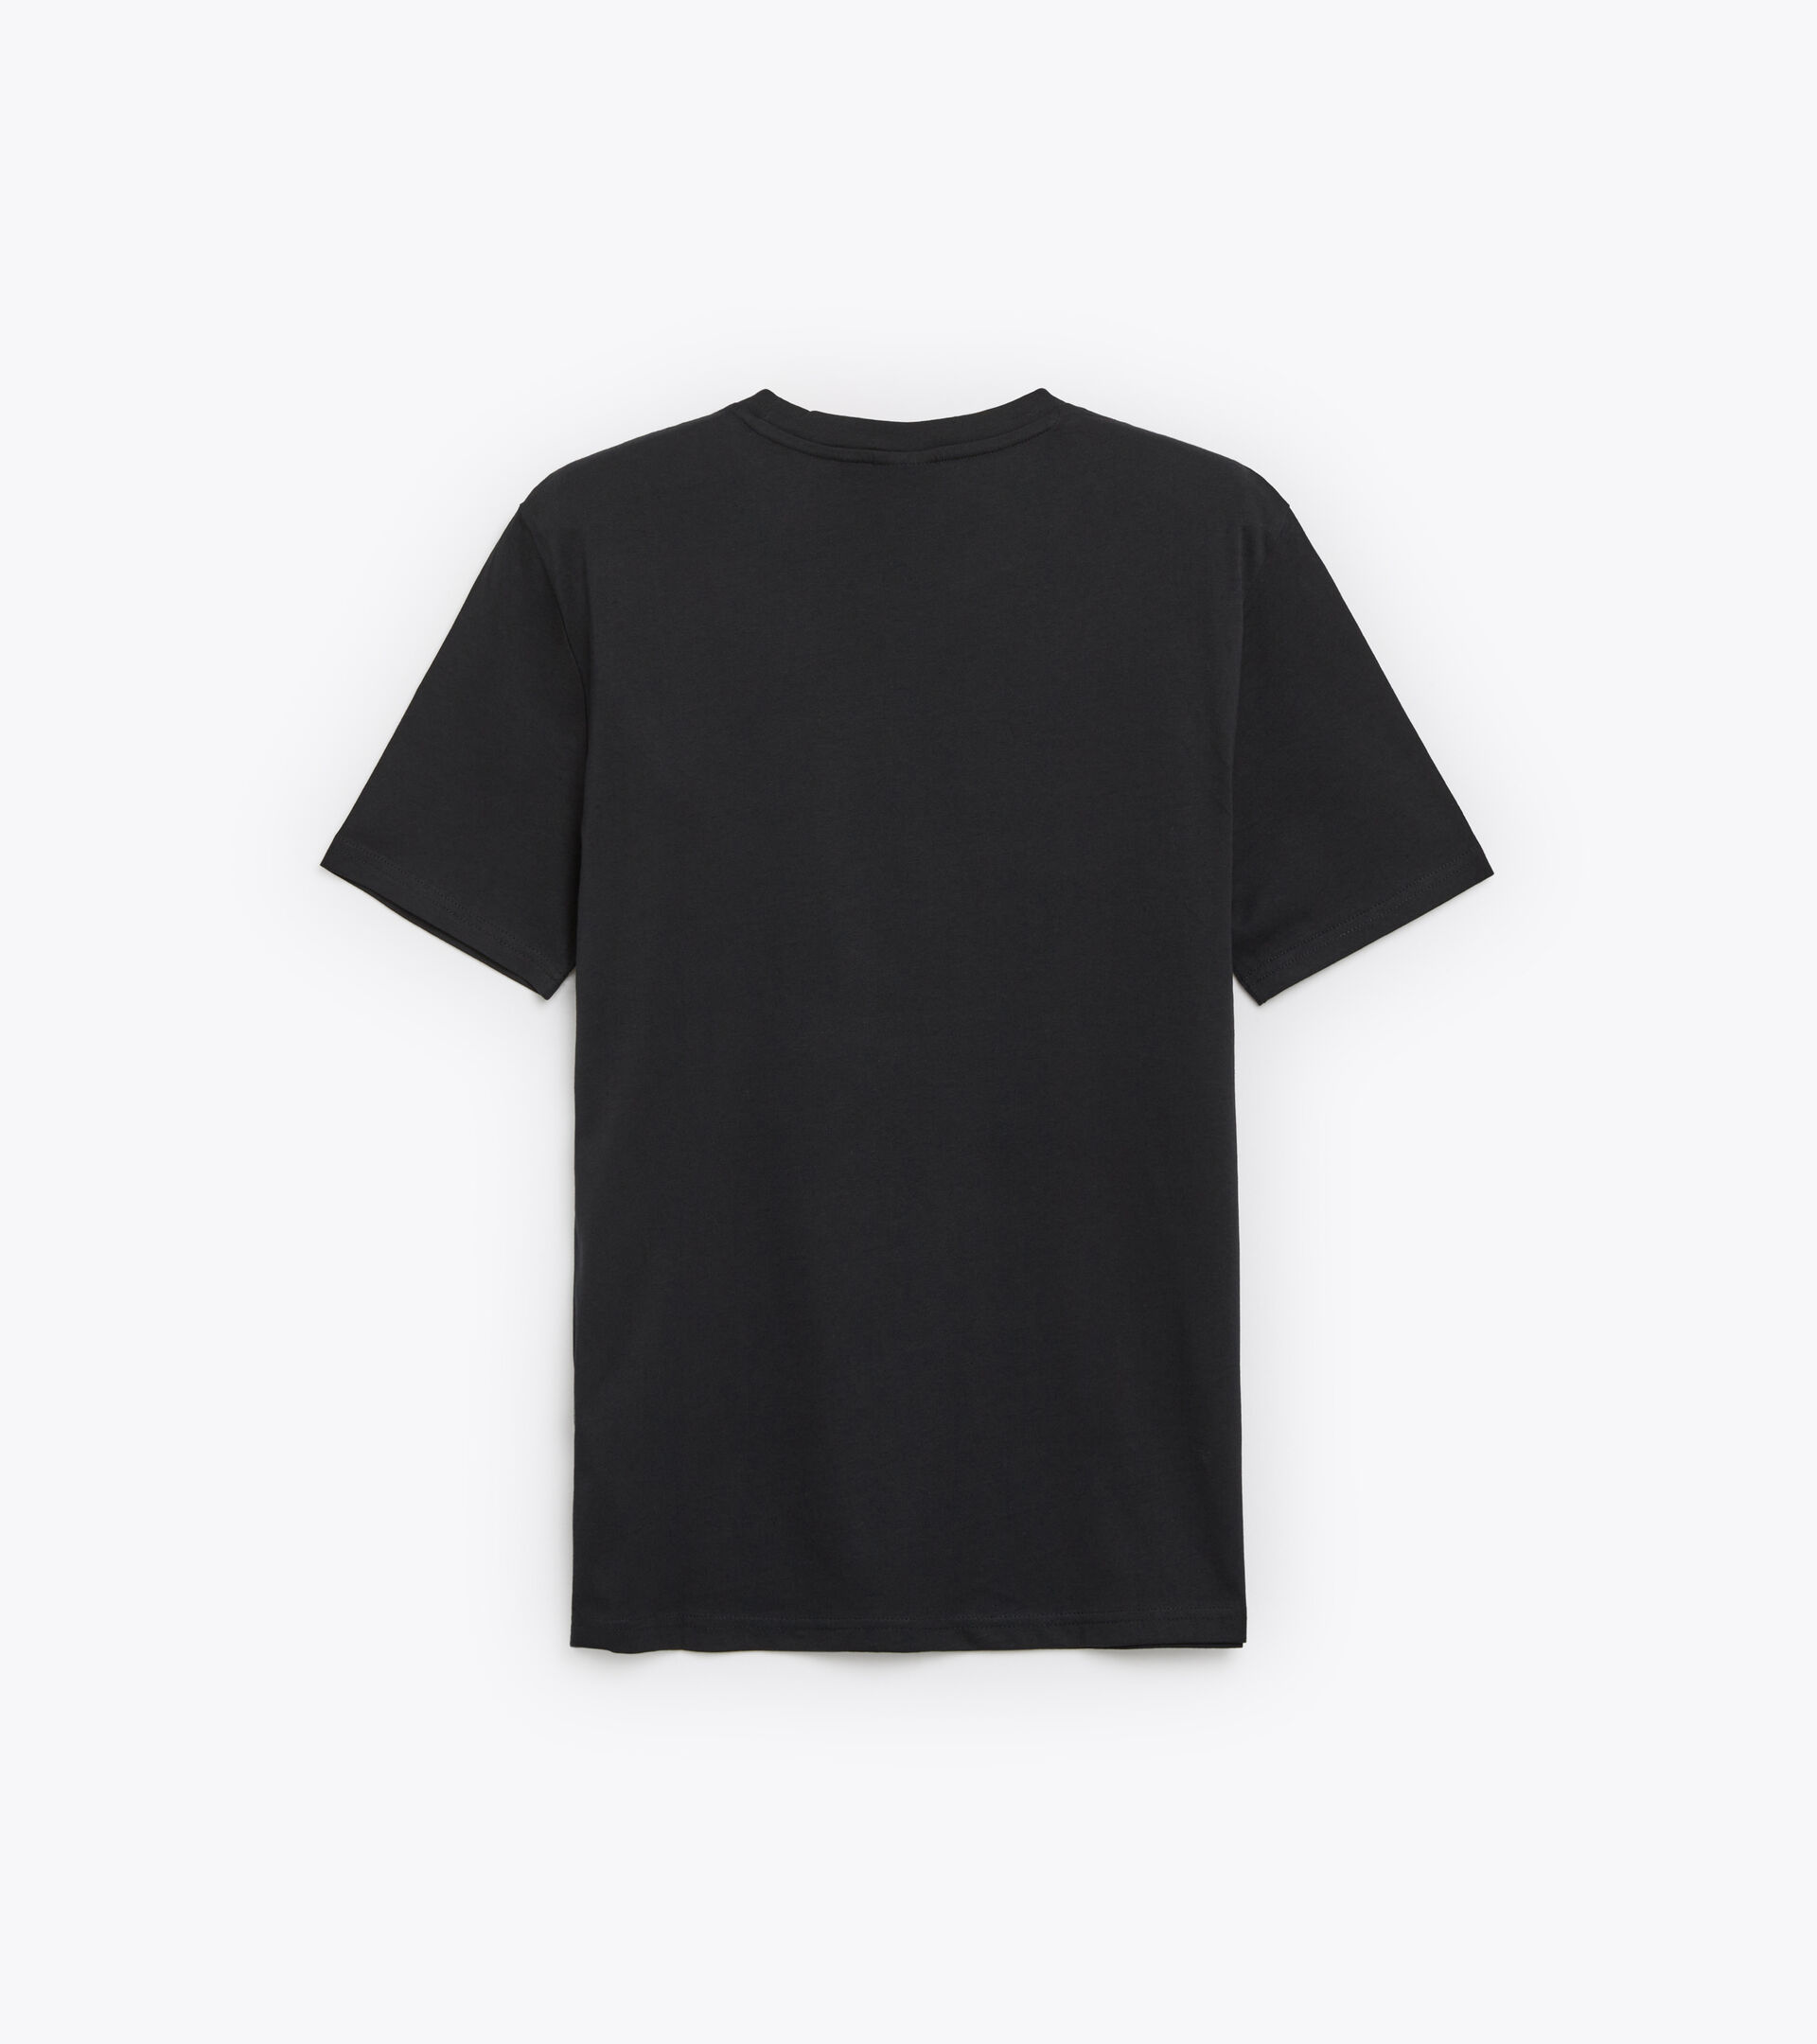 Sports t-shirt - Men T-SHIRT SS CORE BLACK - Diadora